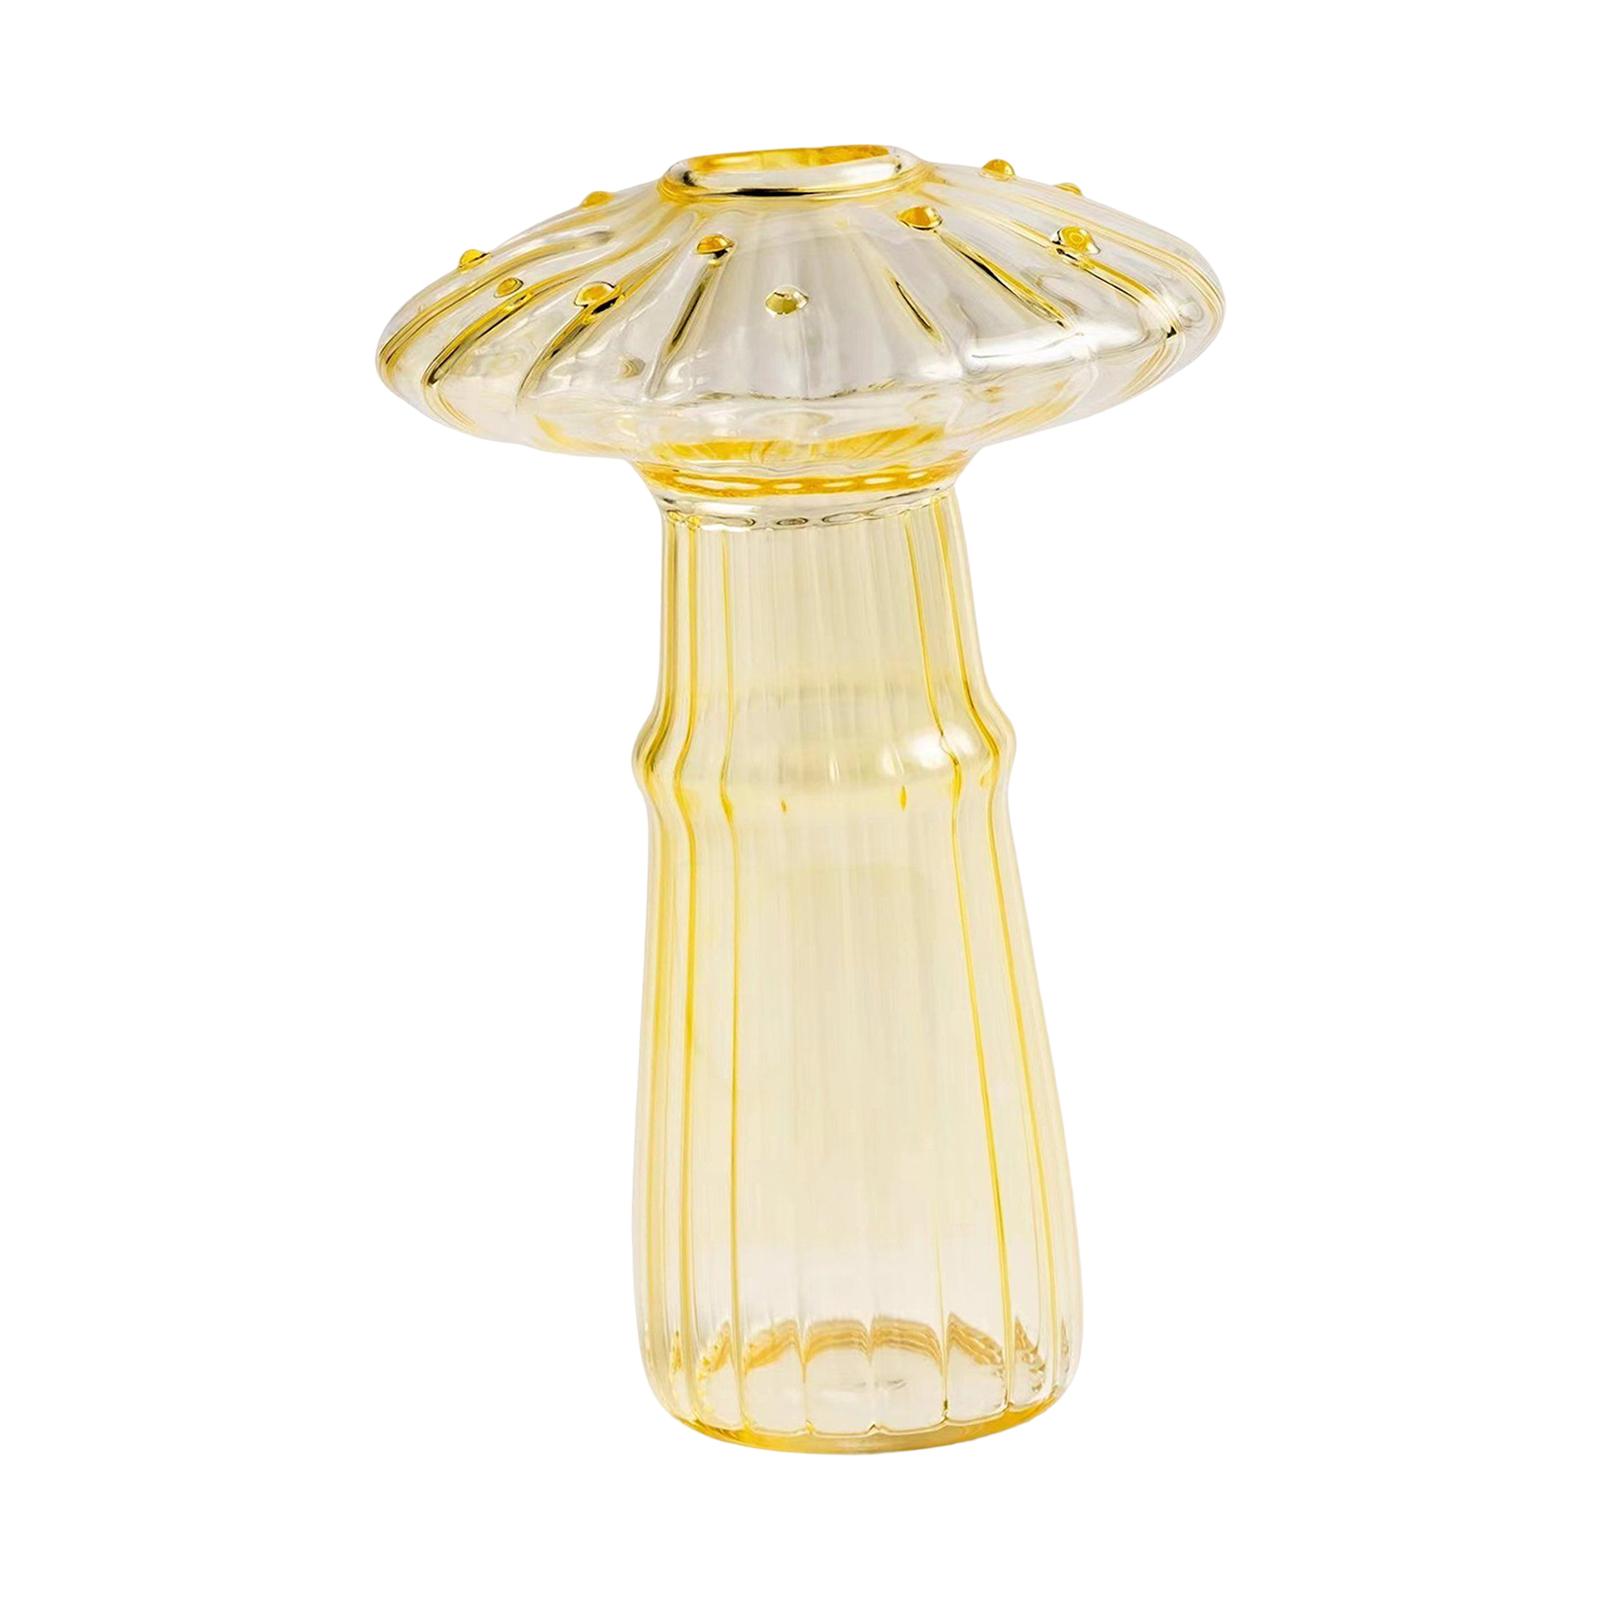 Creative Flower Vase Decorative Vases Mushroom Shaped Glass Vase Home Decor Yellow